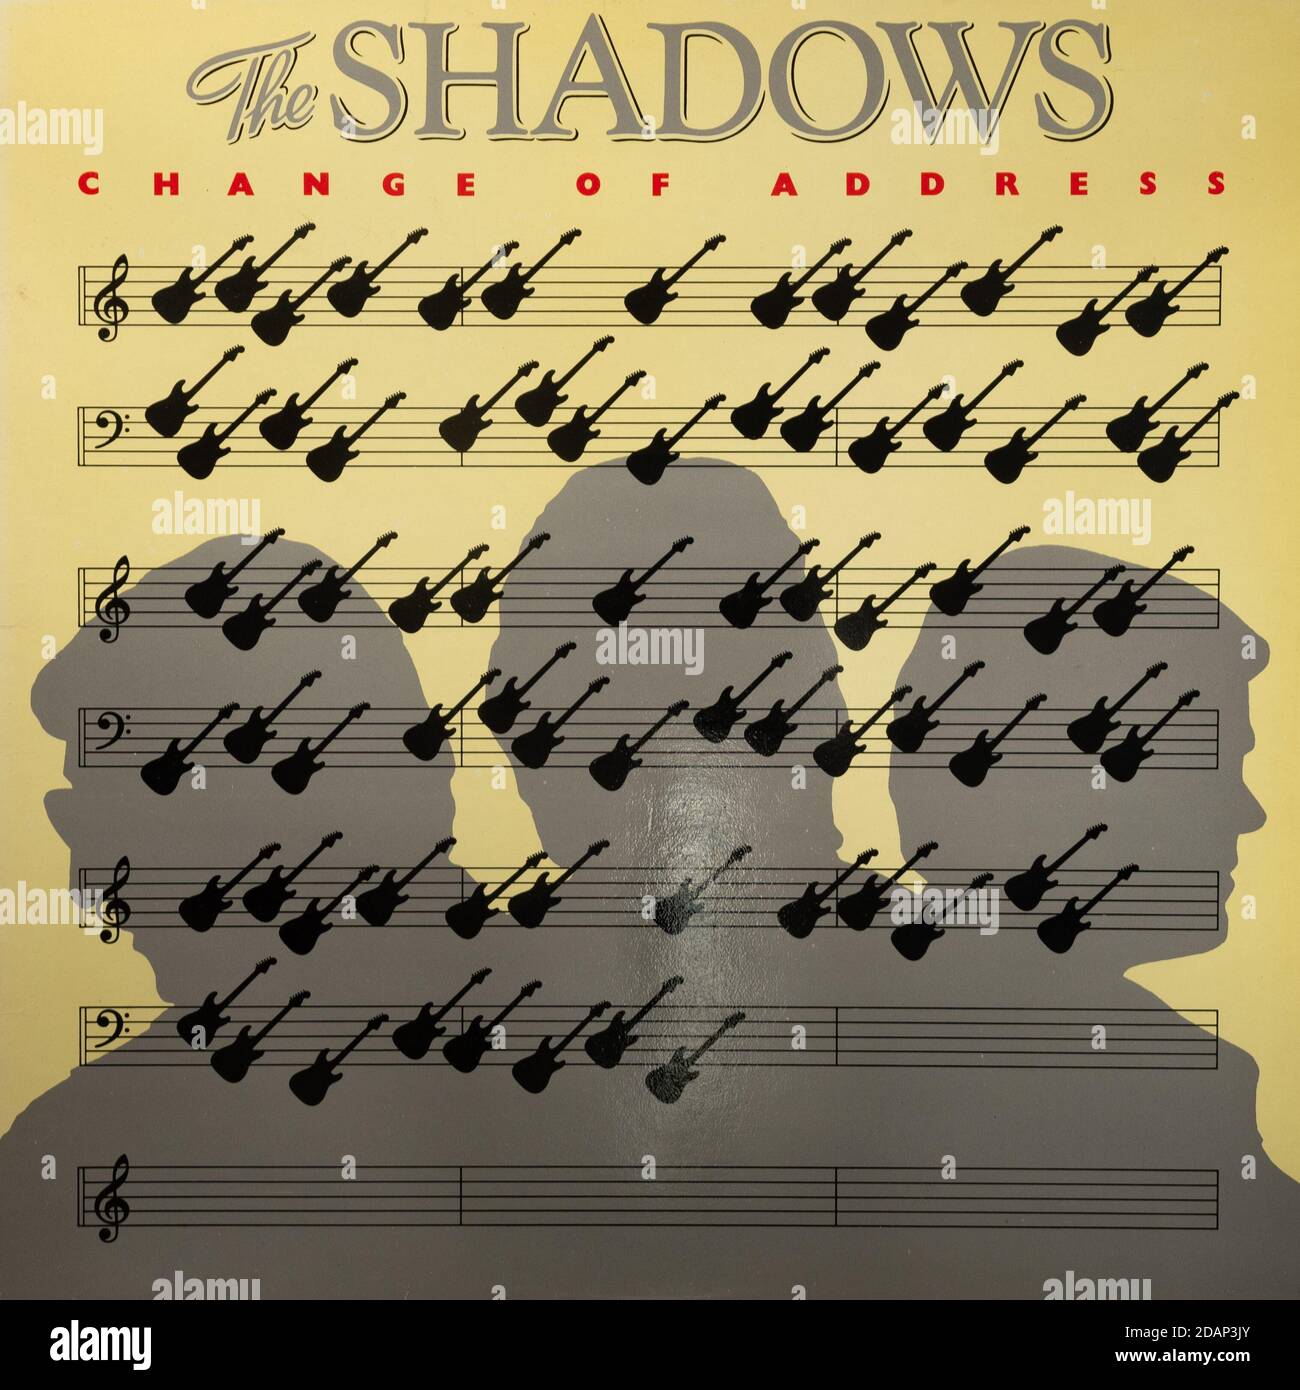 The Shadows, Change of Address, Vinyl LP Album Cover Stockfoto